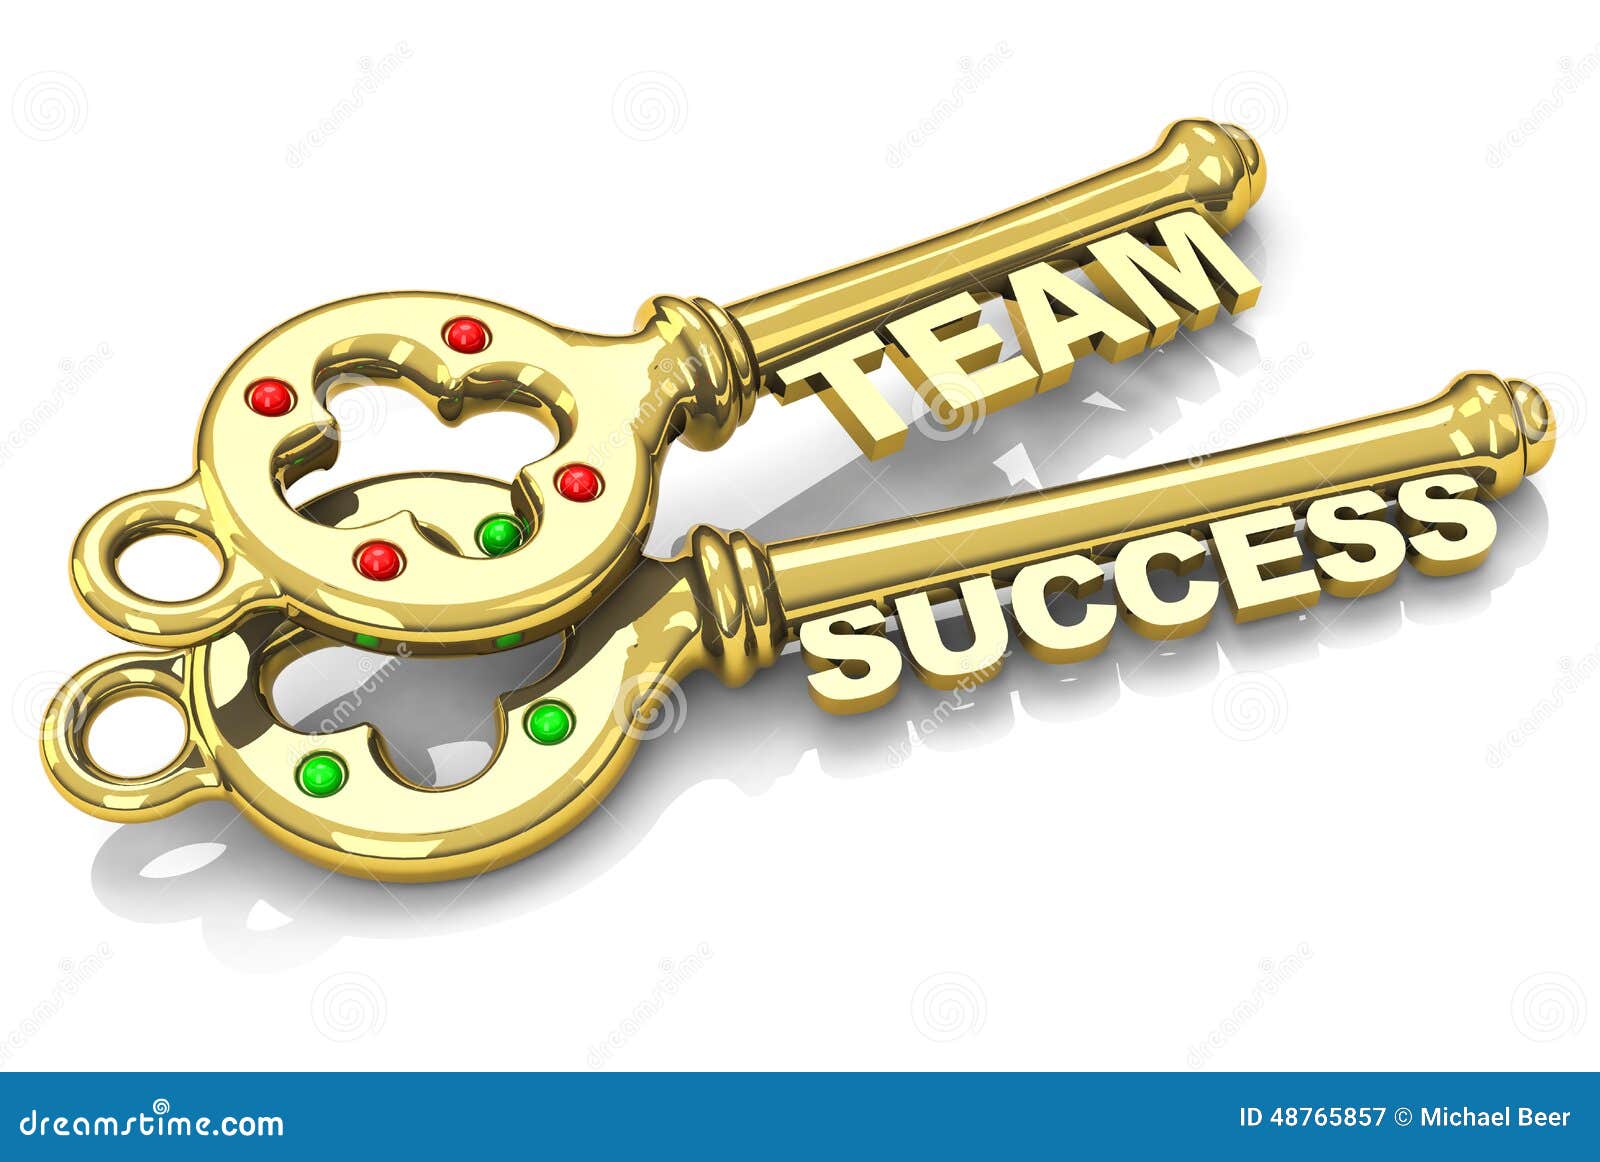 clipart keys to success - photo #20